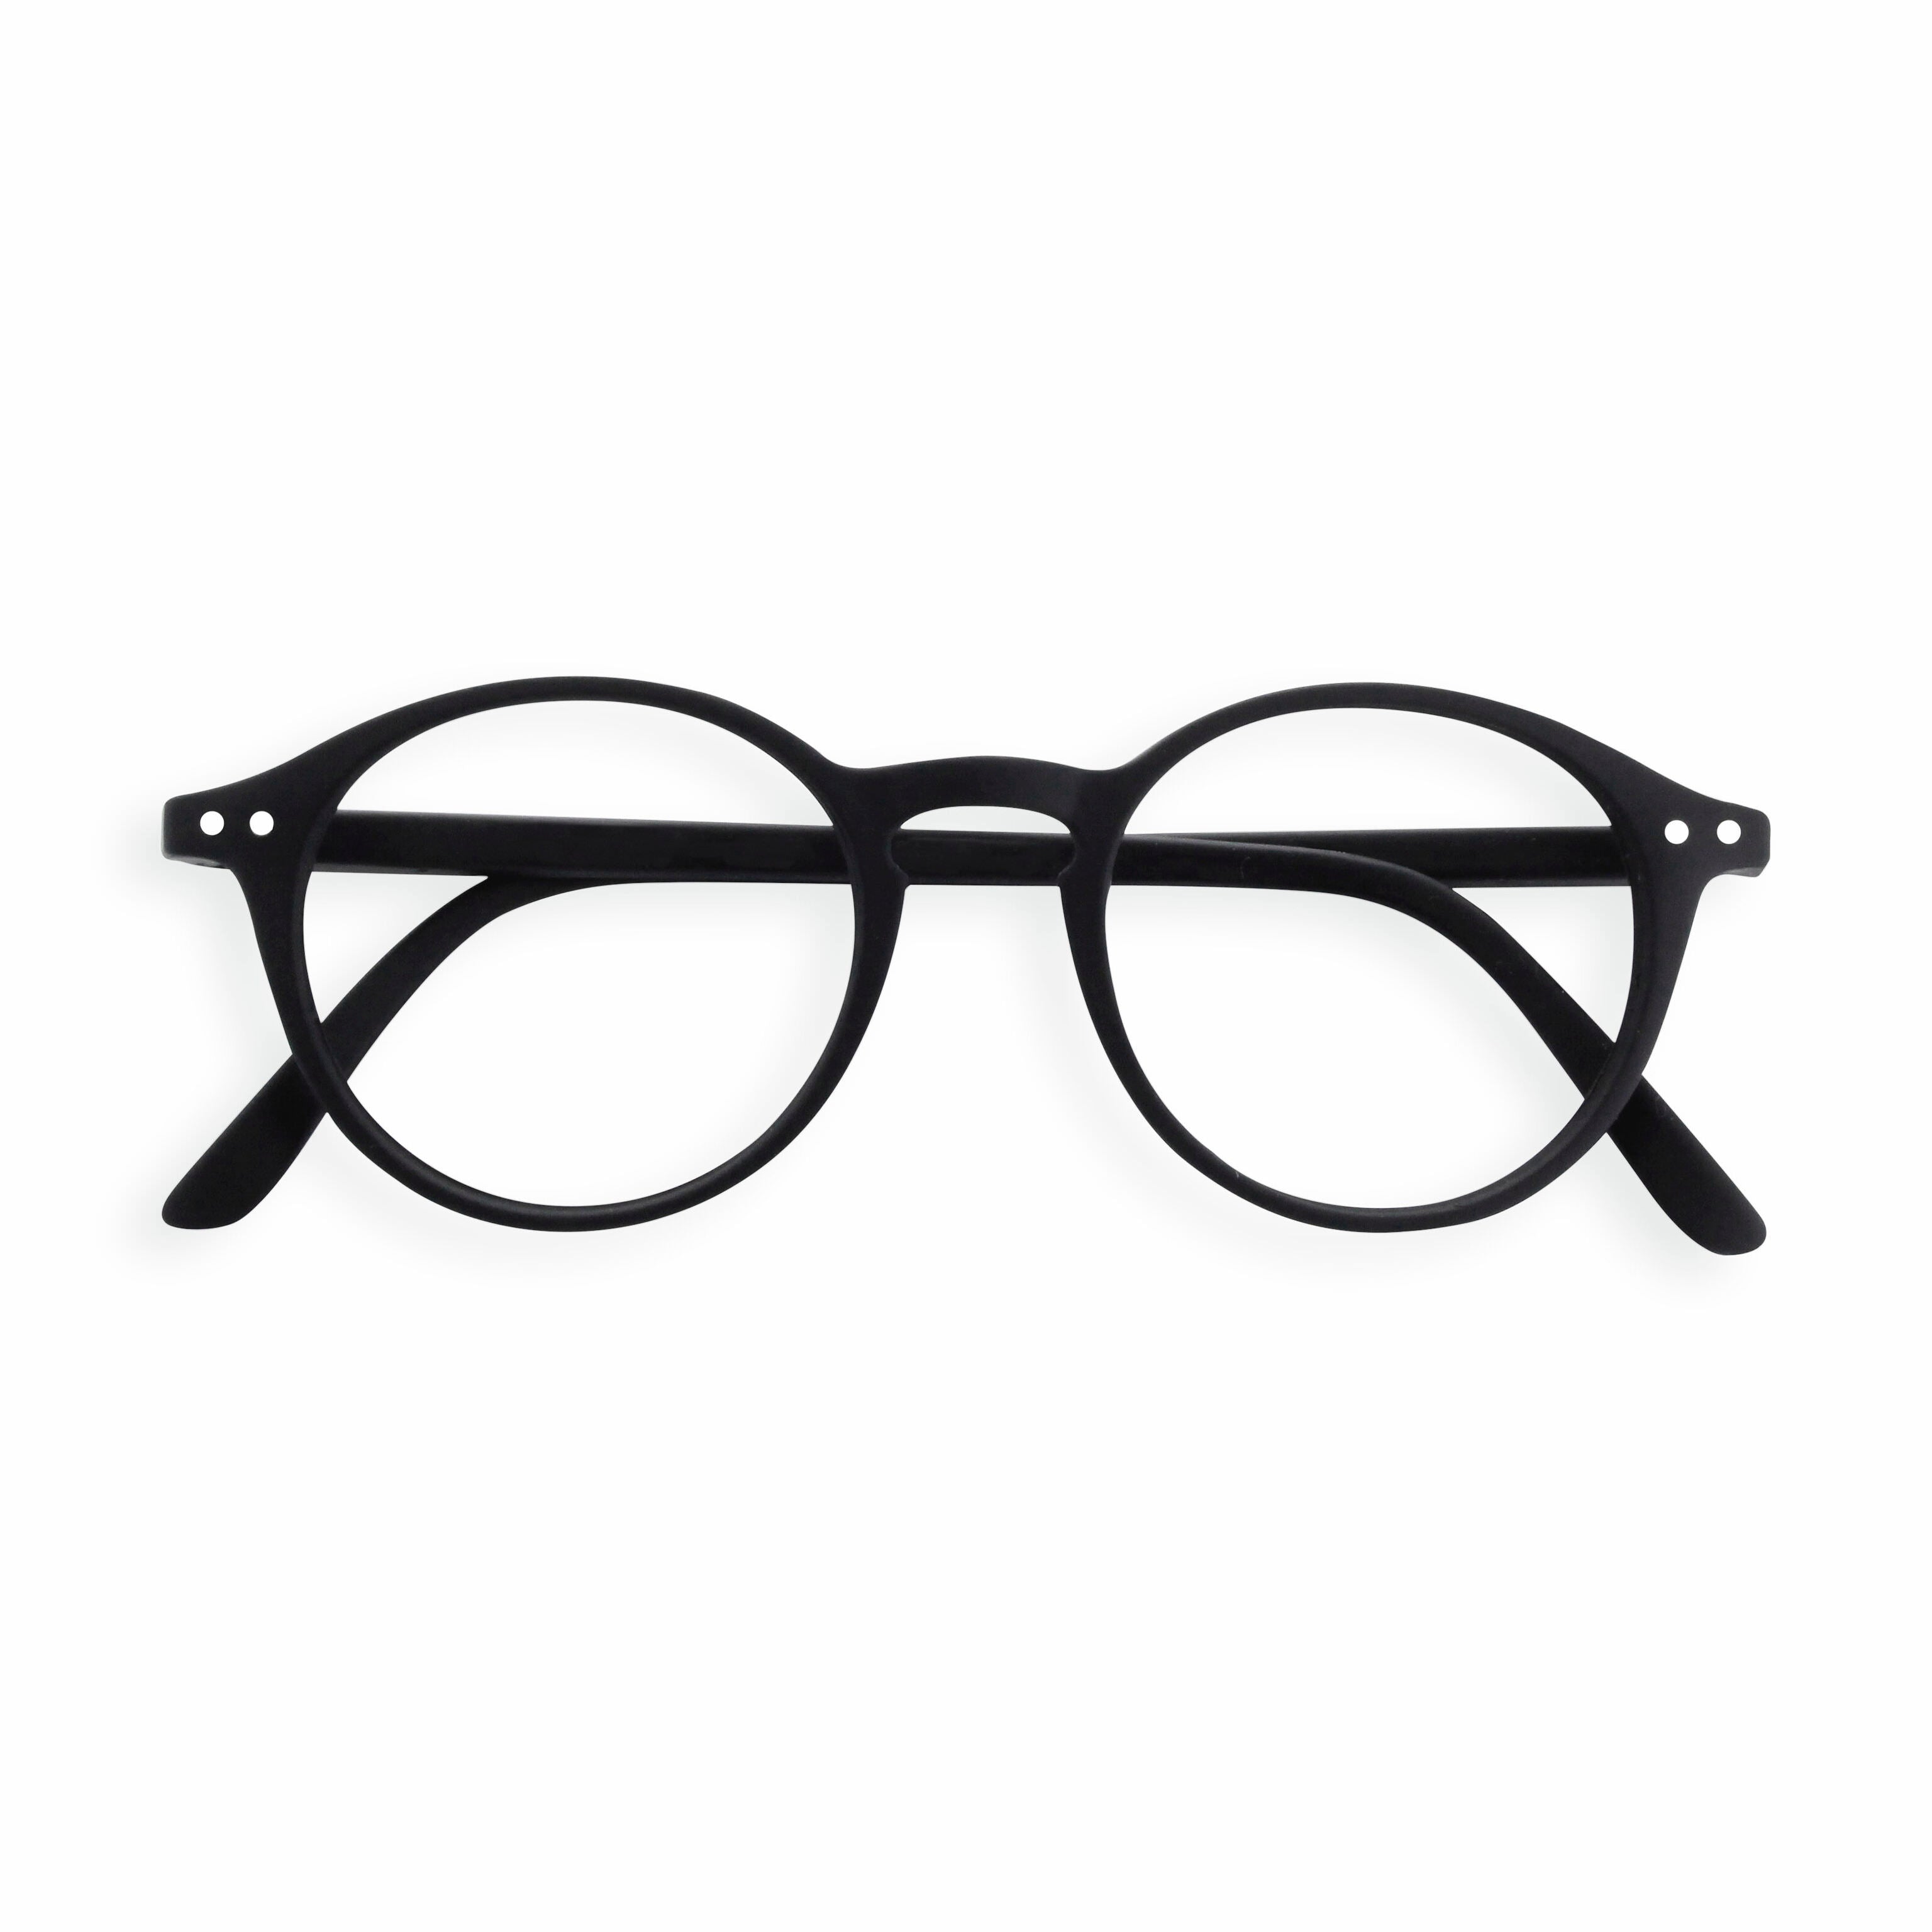 Darice Round Black Frame Glasses